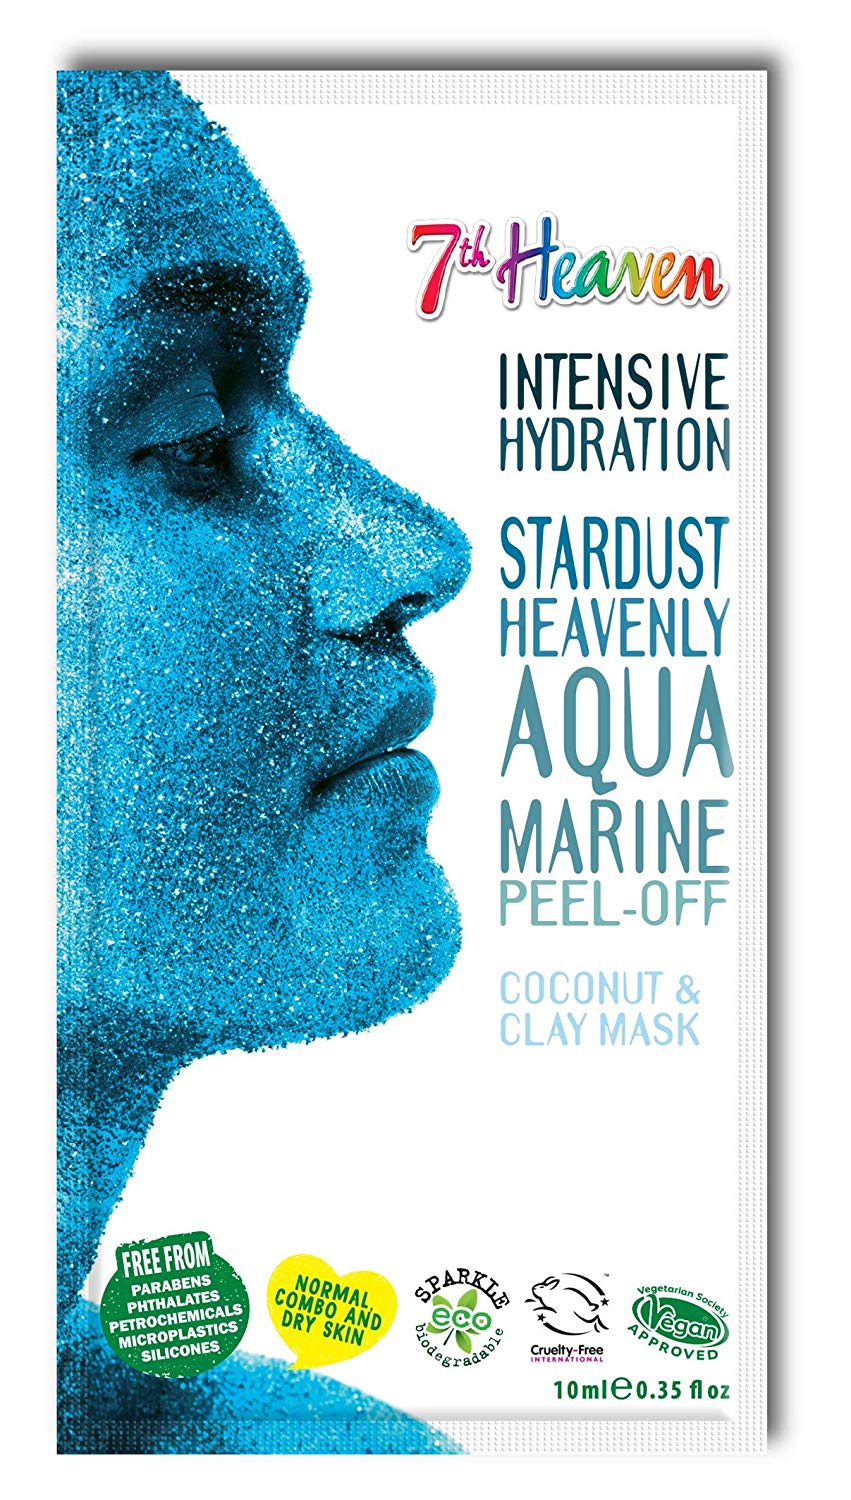 7th Heaven StarDust Heavenly Aquamarine Peel-Off Coconut Clay Mask